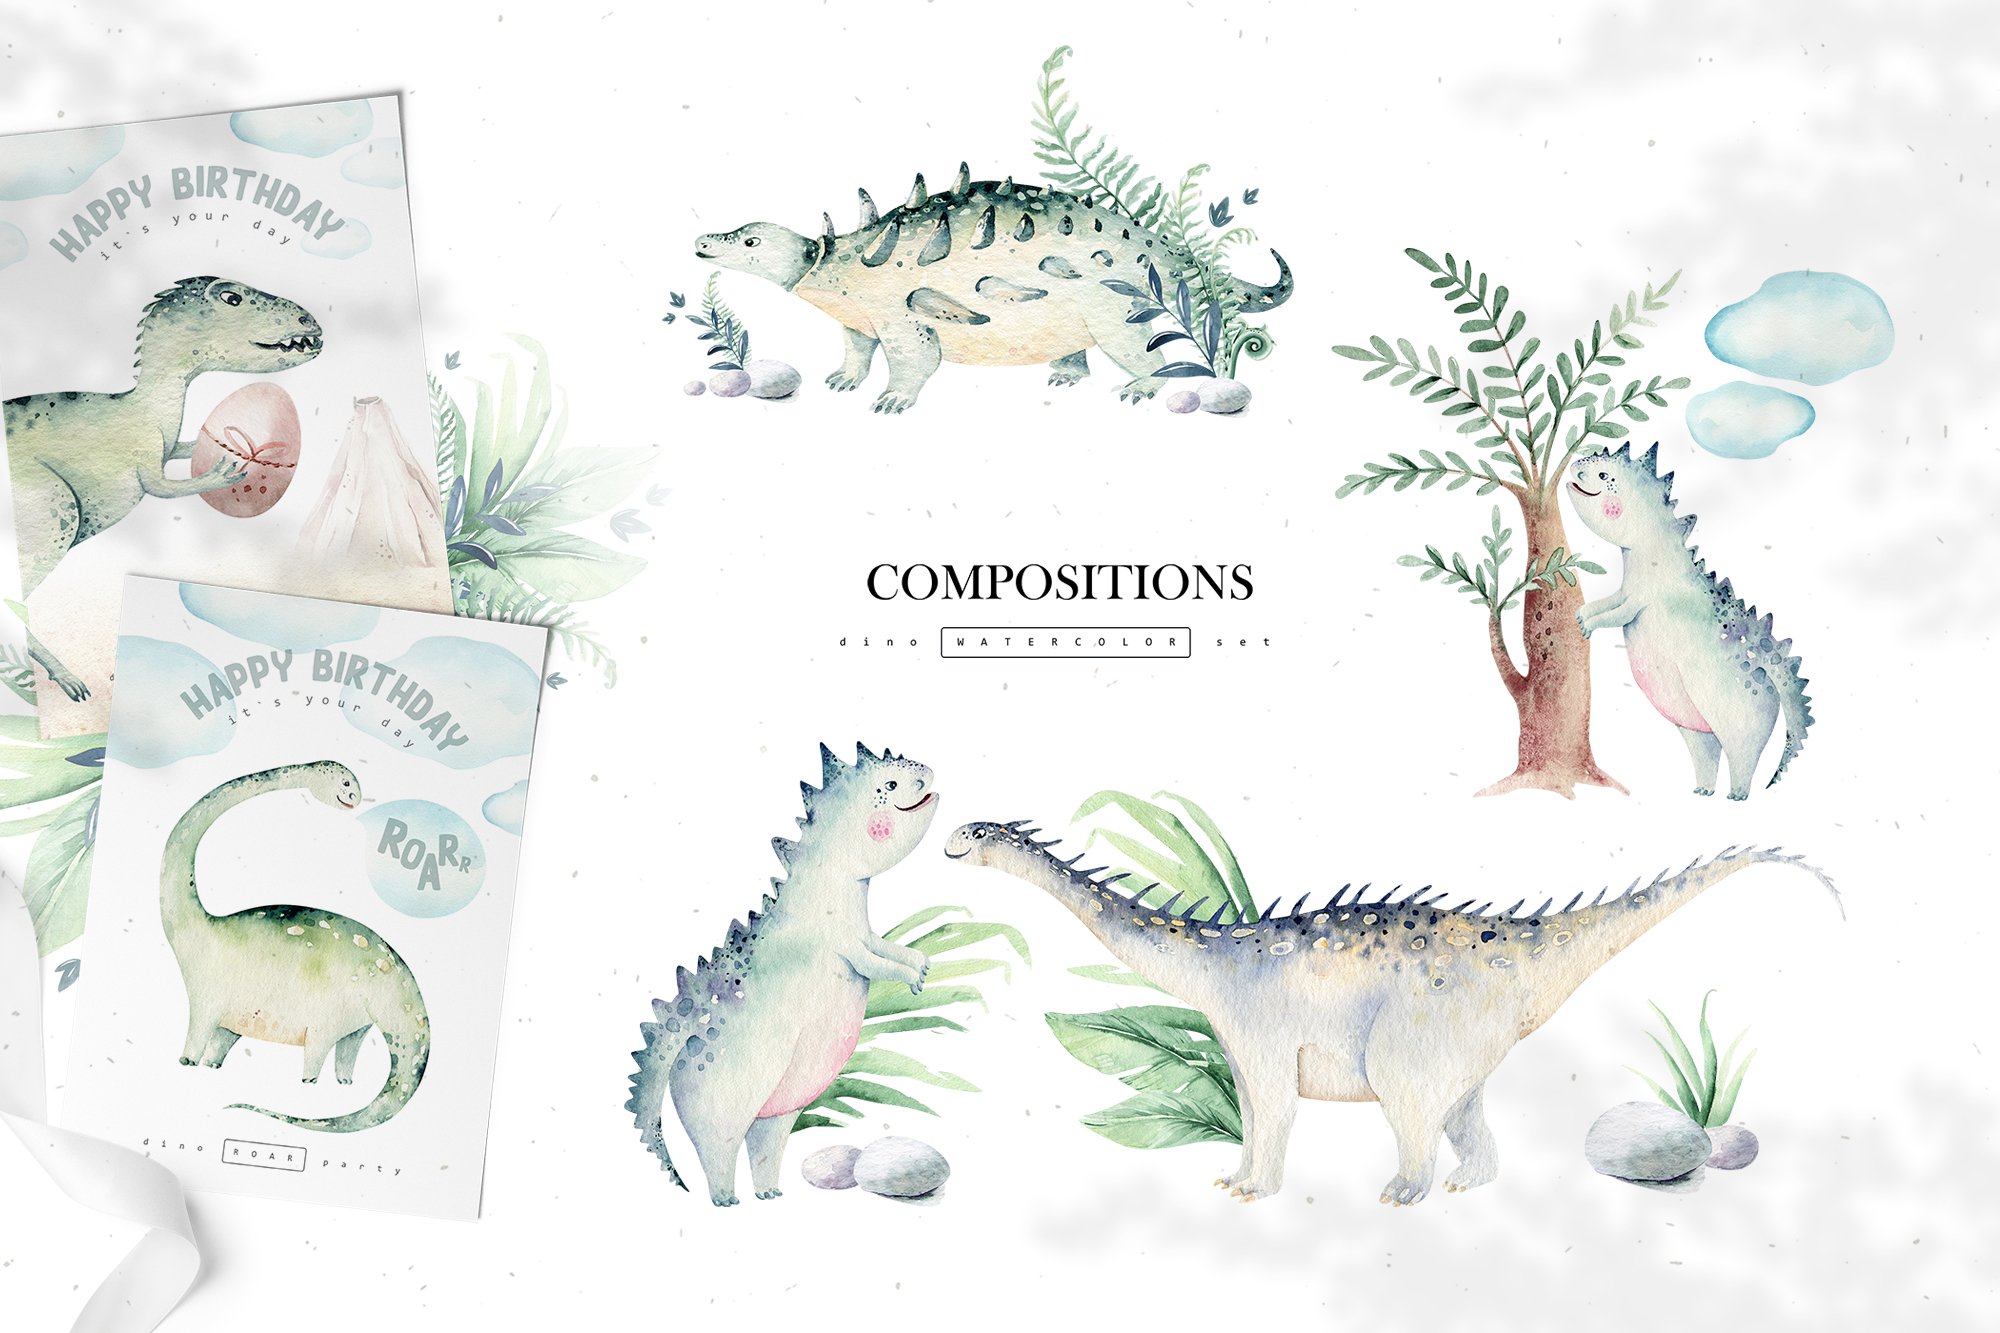 Dino Watercolor Collection - Dinosaur Set Part II